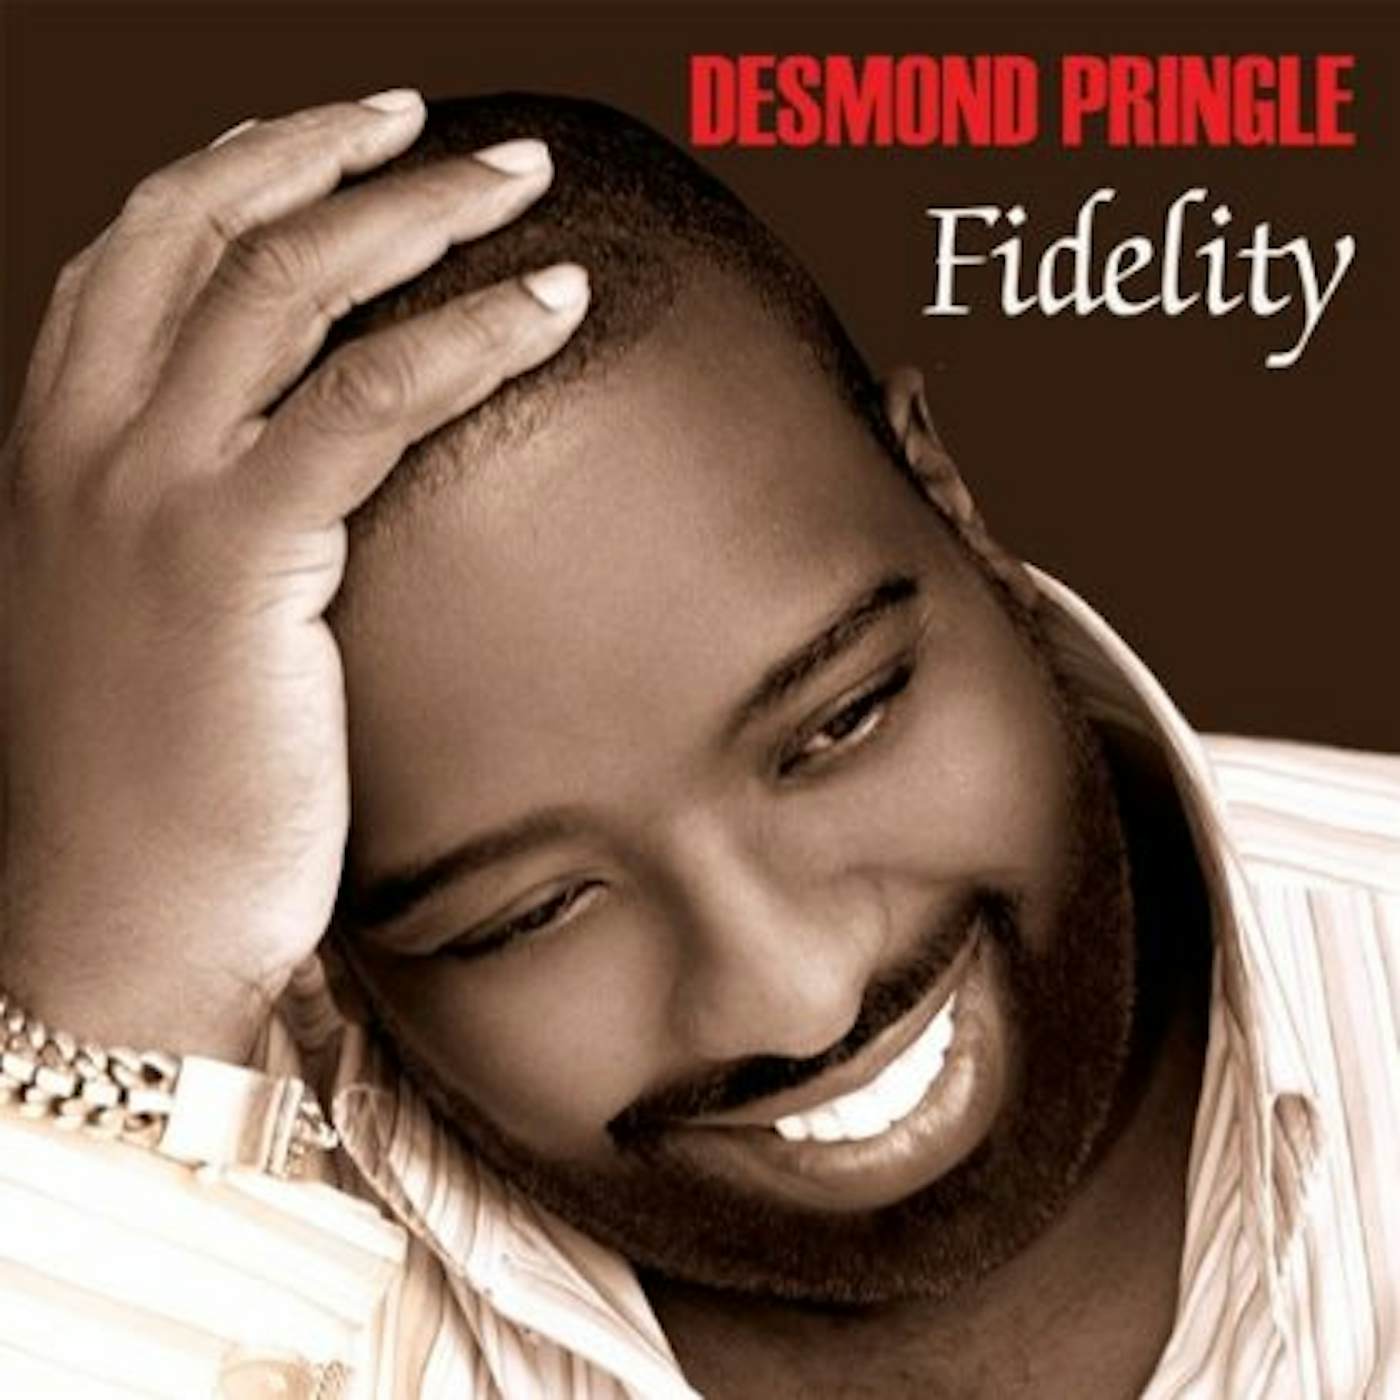 Desmond Pringle FIDELITY CD